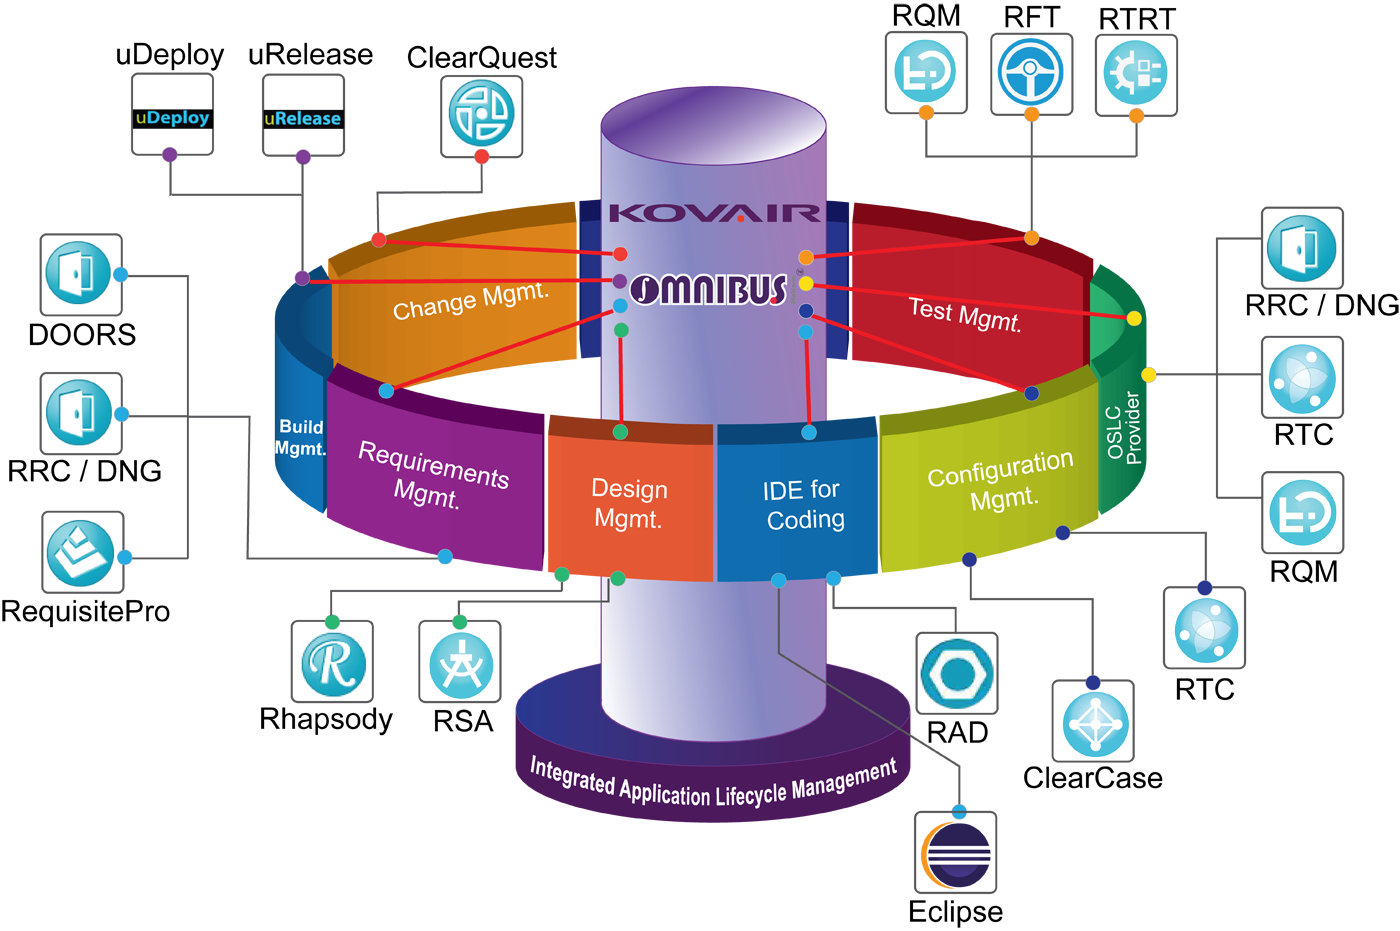 Kovair Integration with Various IBM Tools